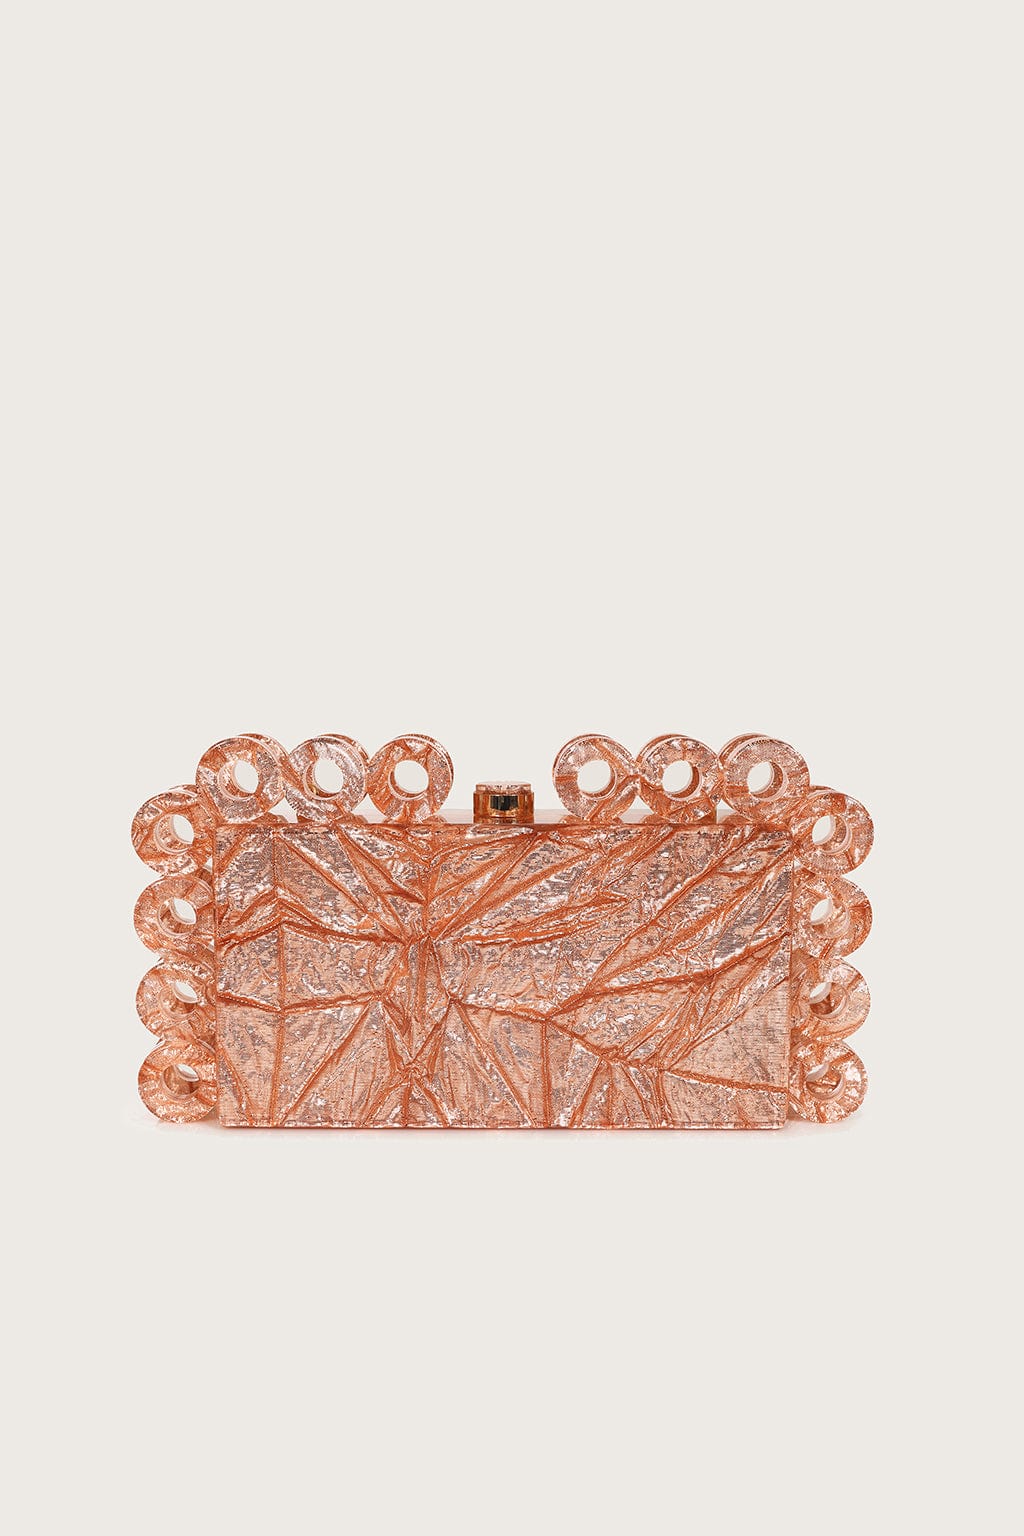 CELESTE Circular Textured Box Clutch Bag in Rose Gold